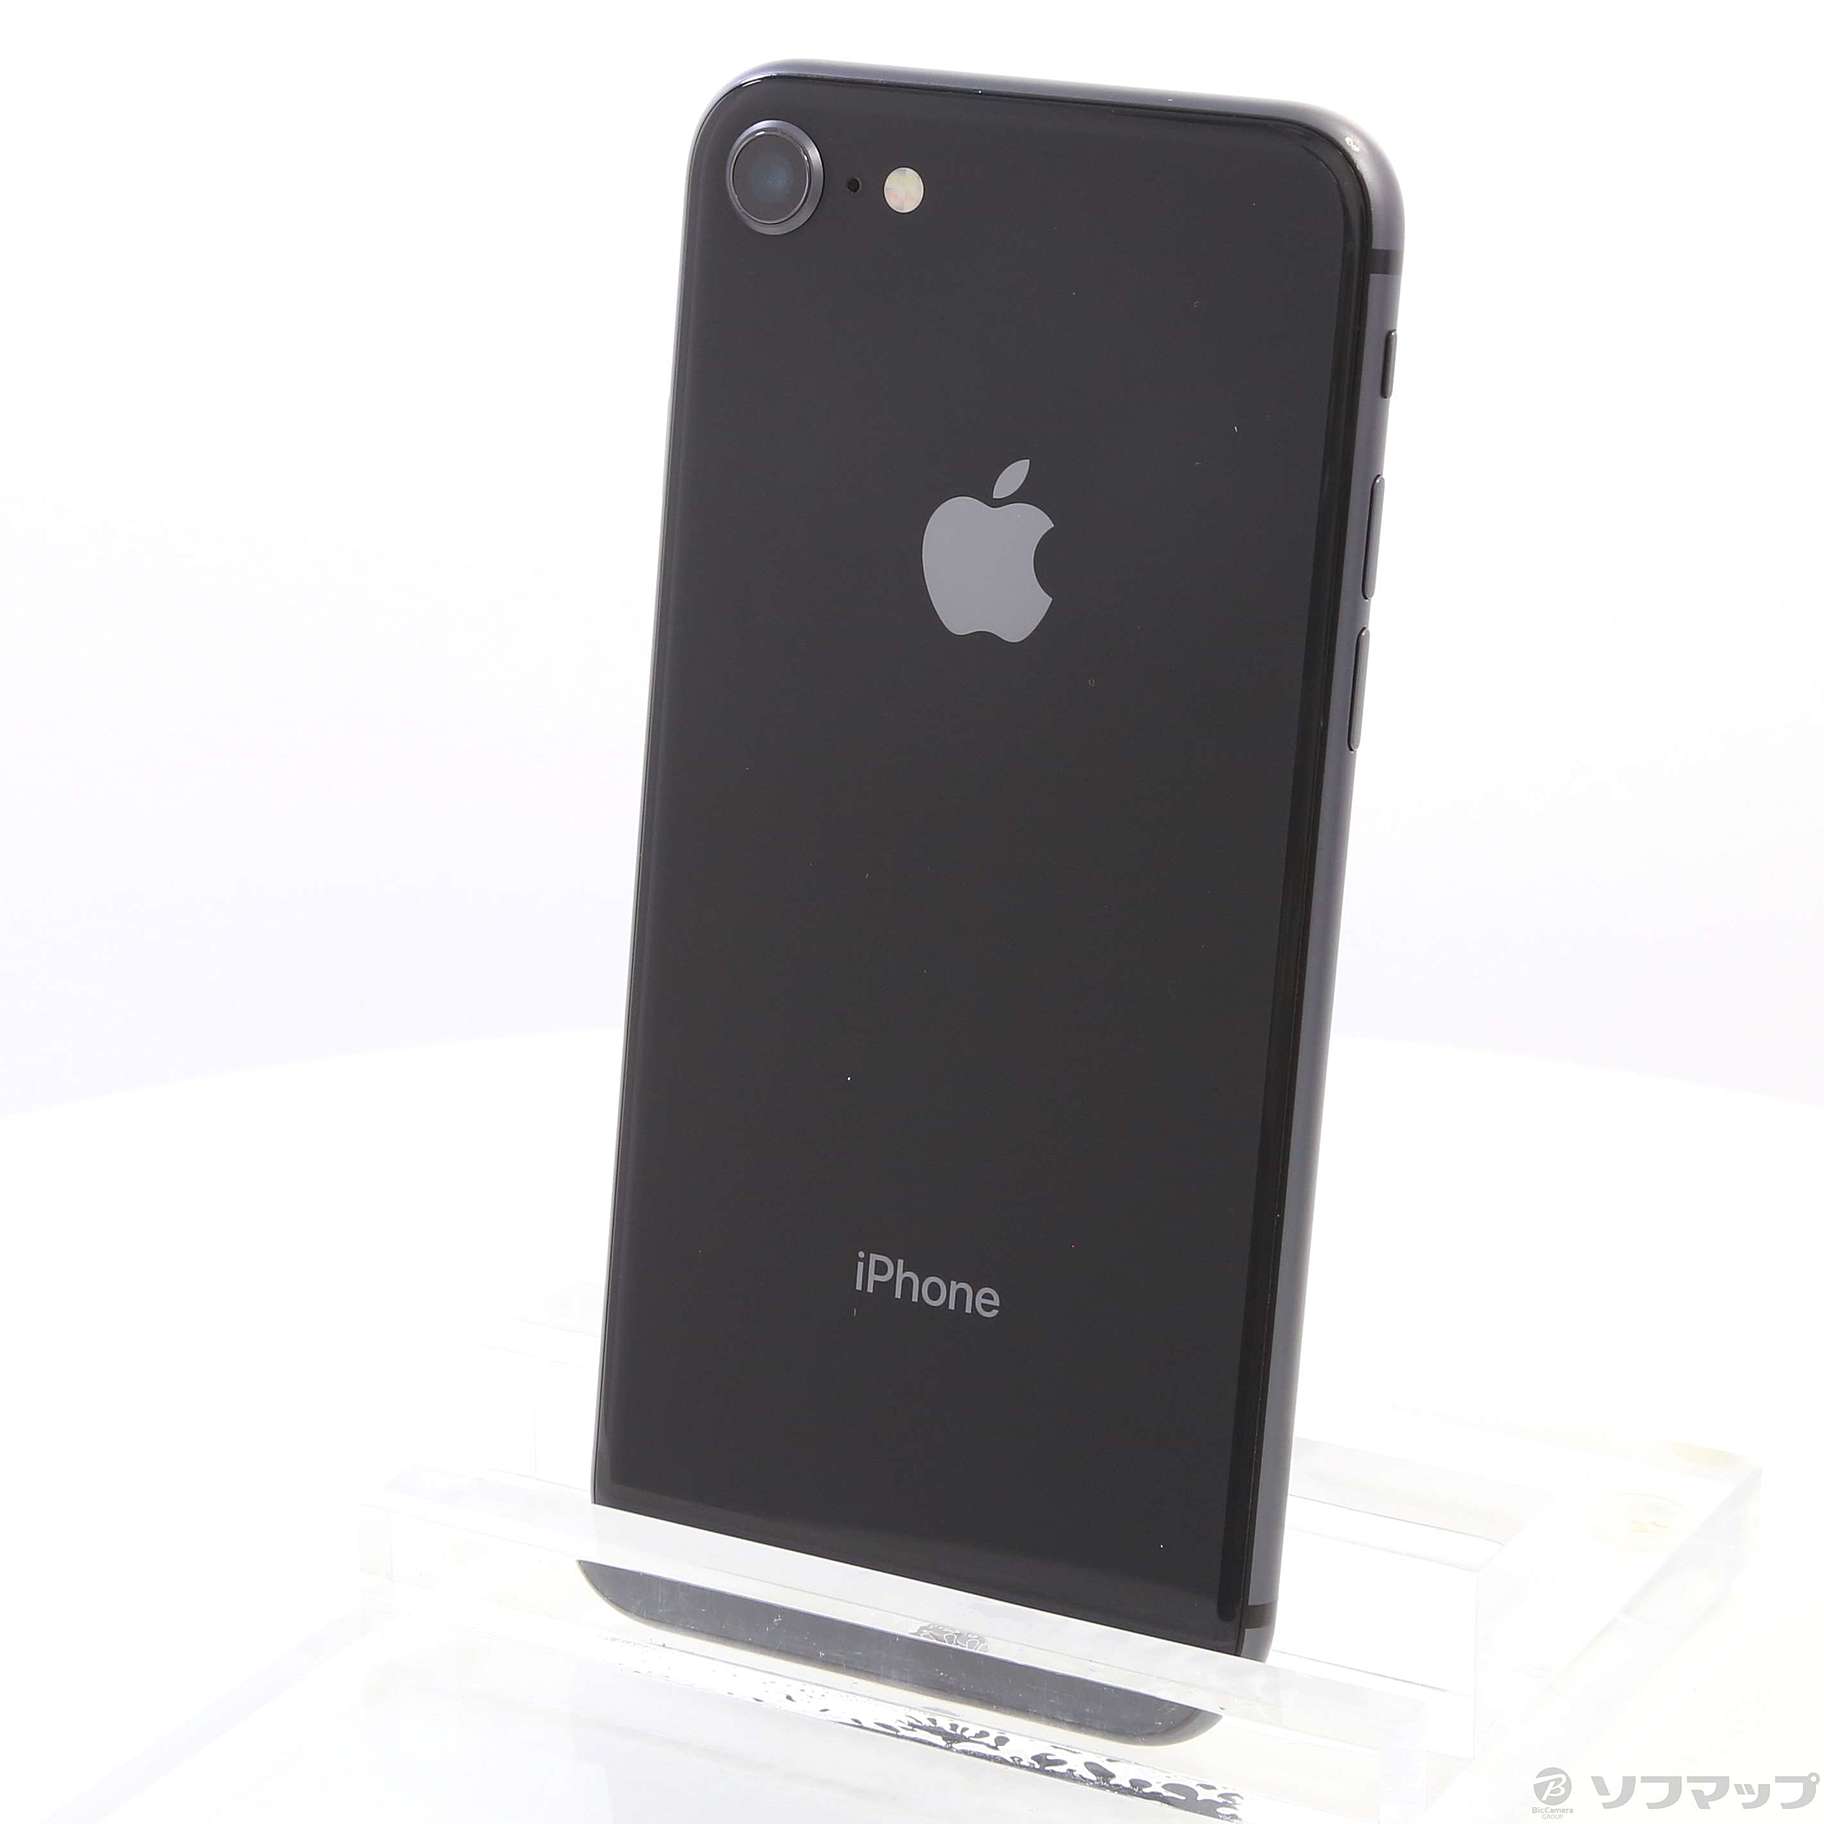 iPhone 8 Space Gray 64 GB Softbank - rehda.com